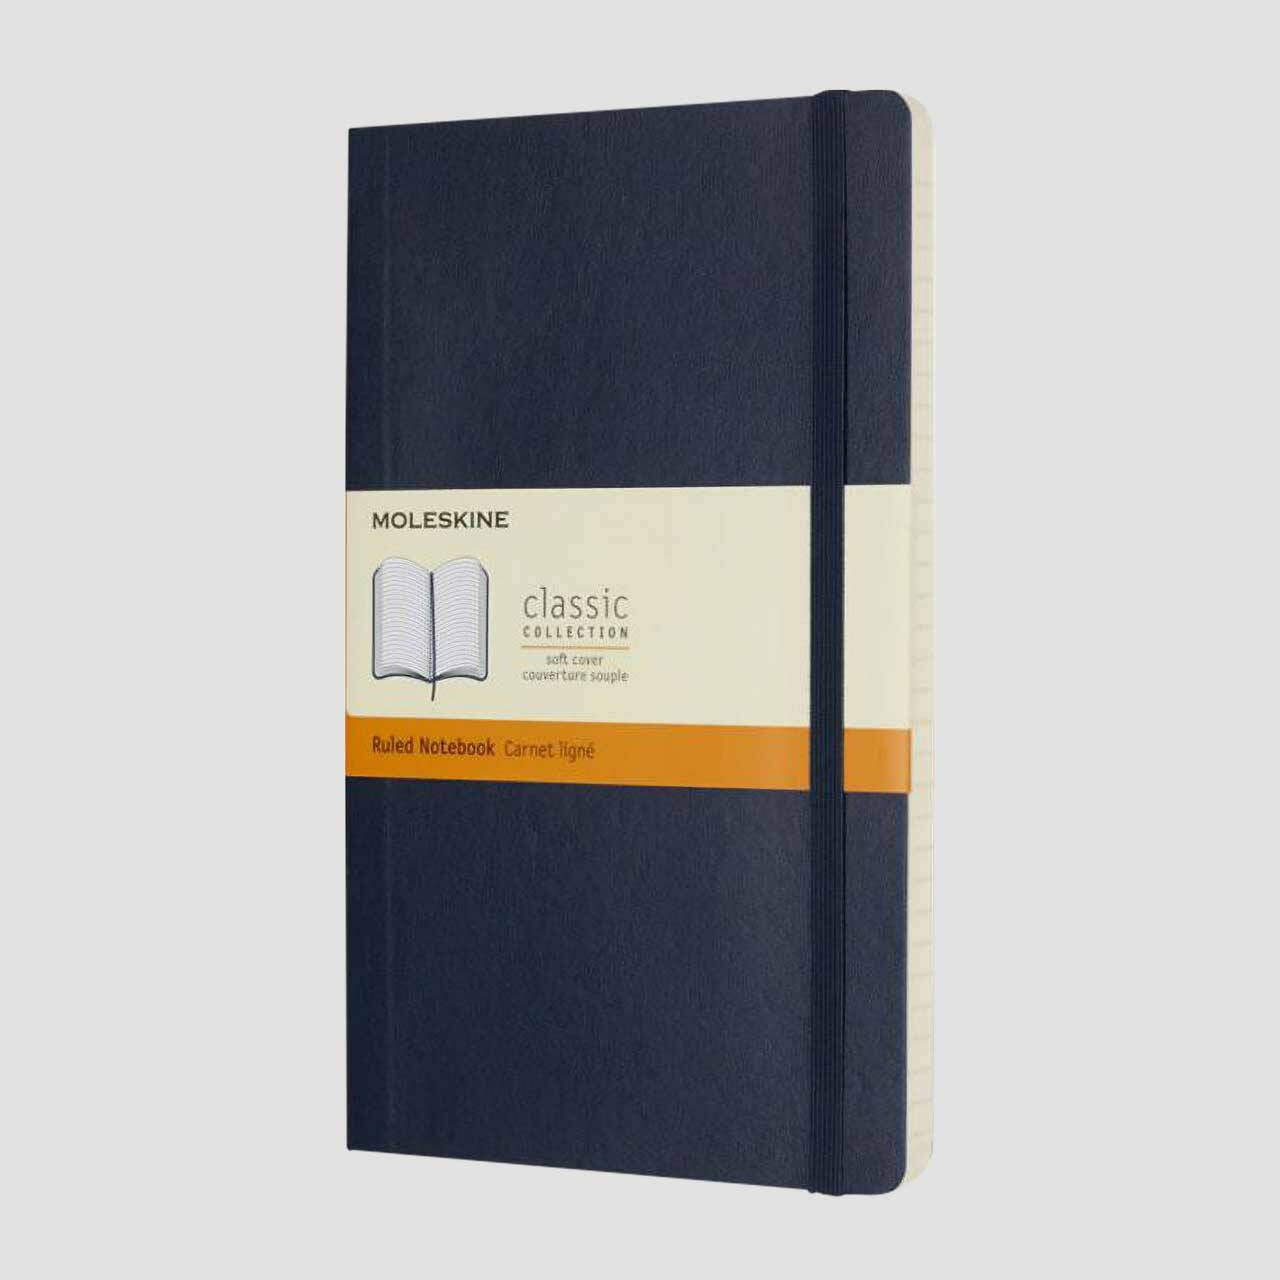 Moleskine notitieboek soft cover sapphire blauw